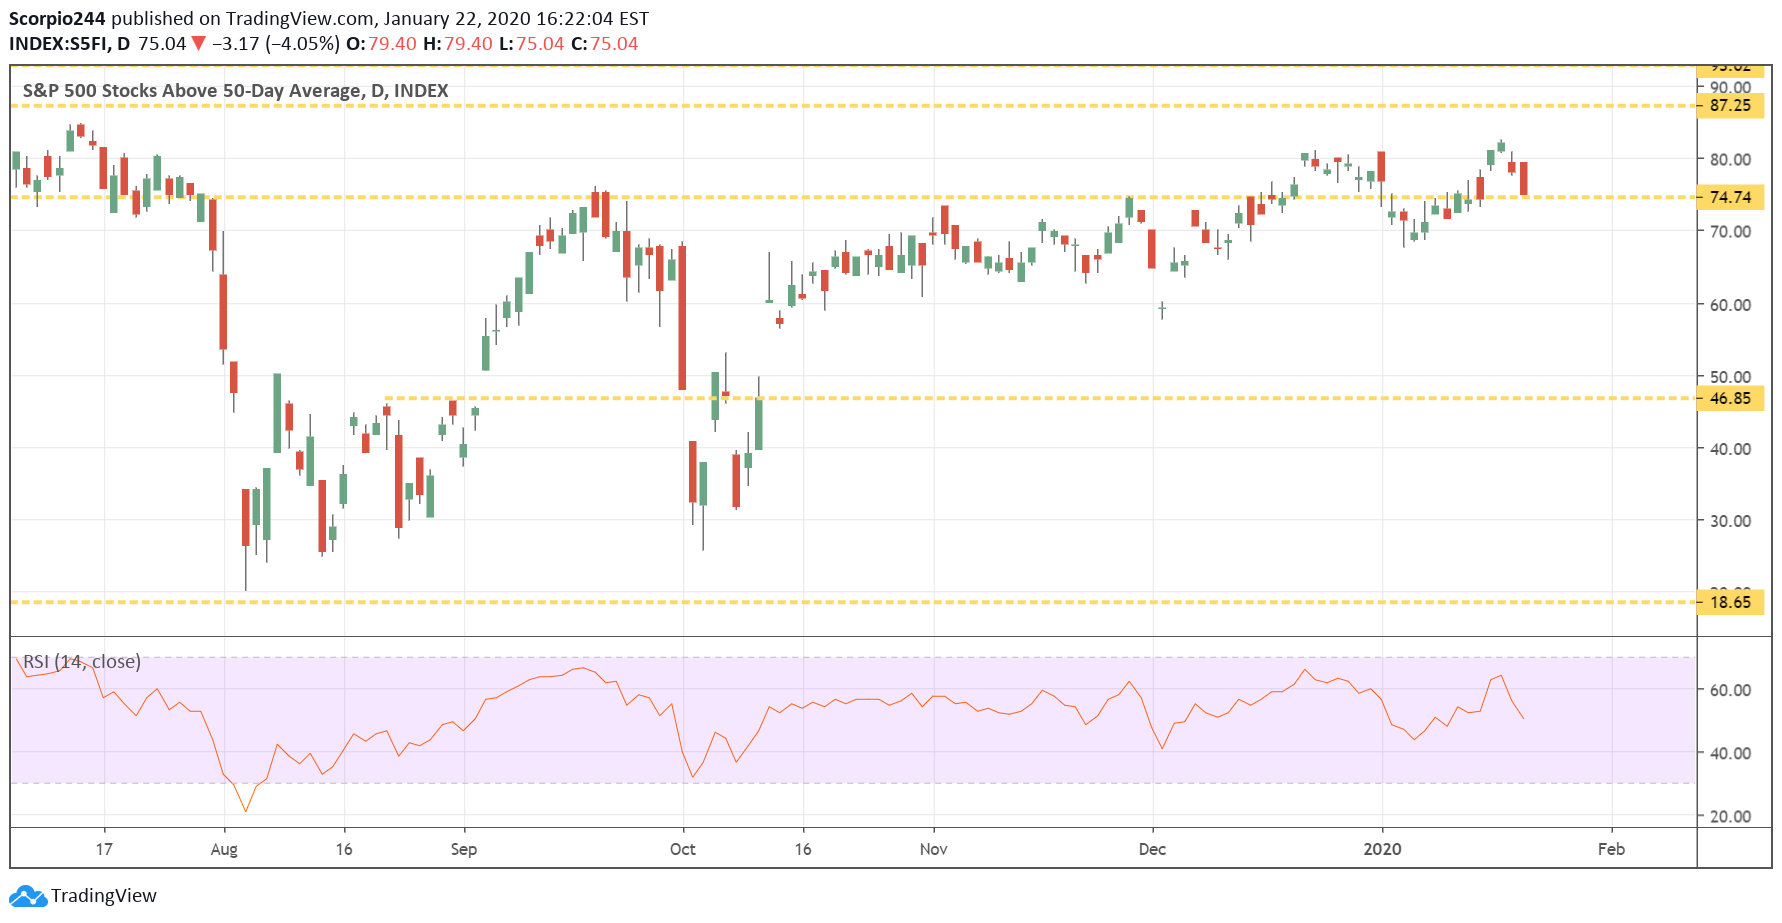 S&P 500 Stocks Above 50 Day Average